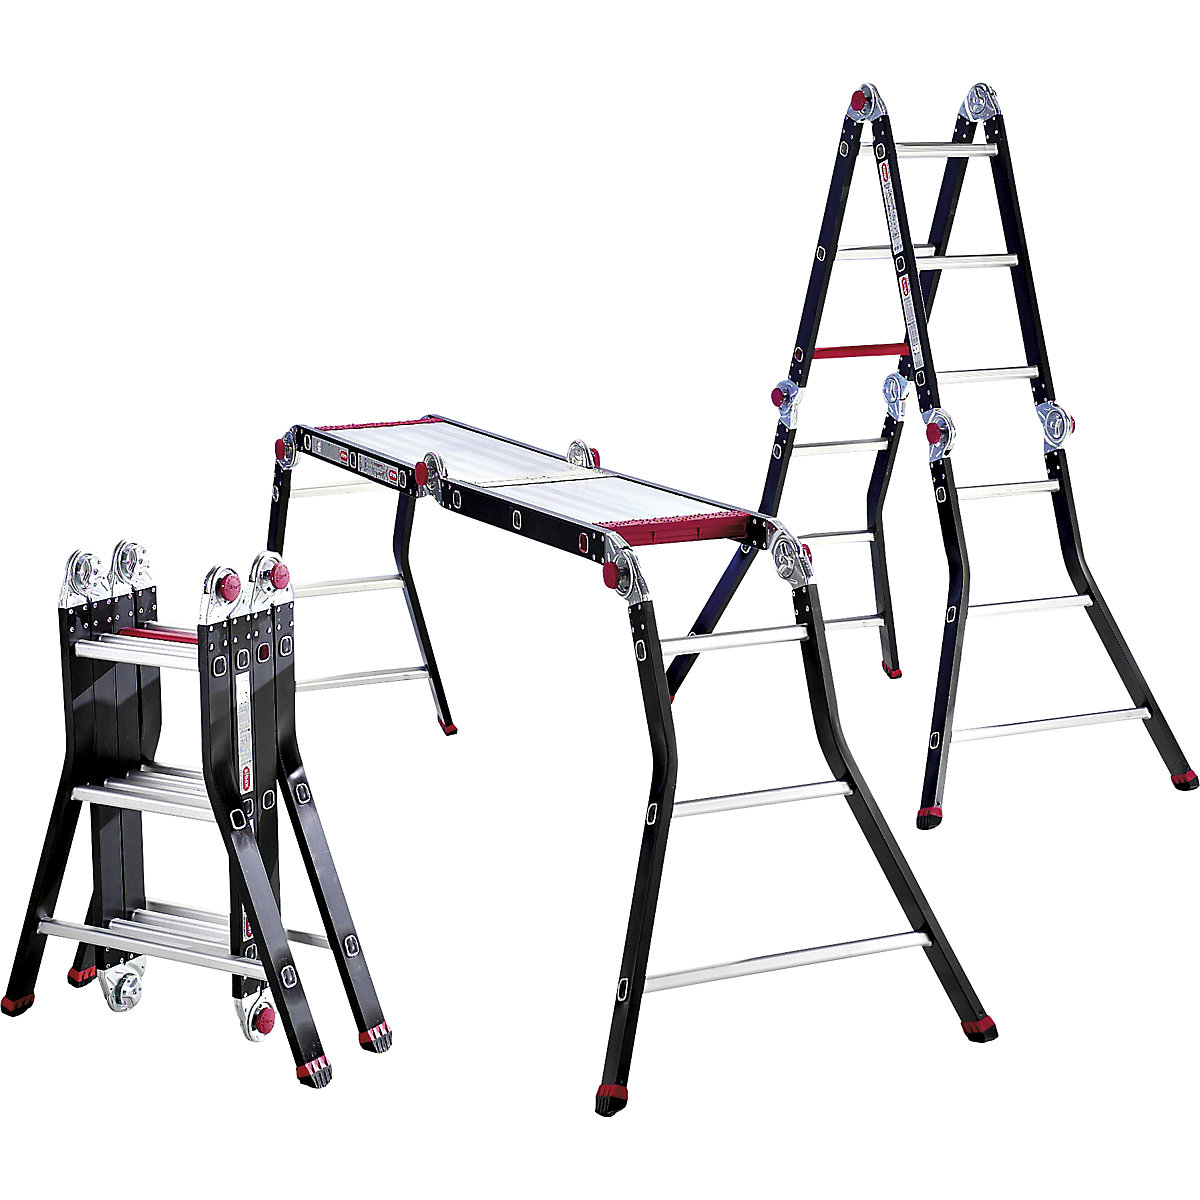 Professional multi-purpose ladder - Altrex